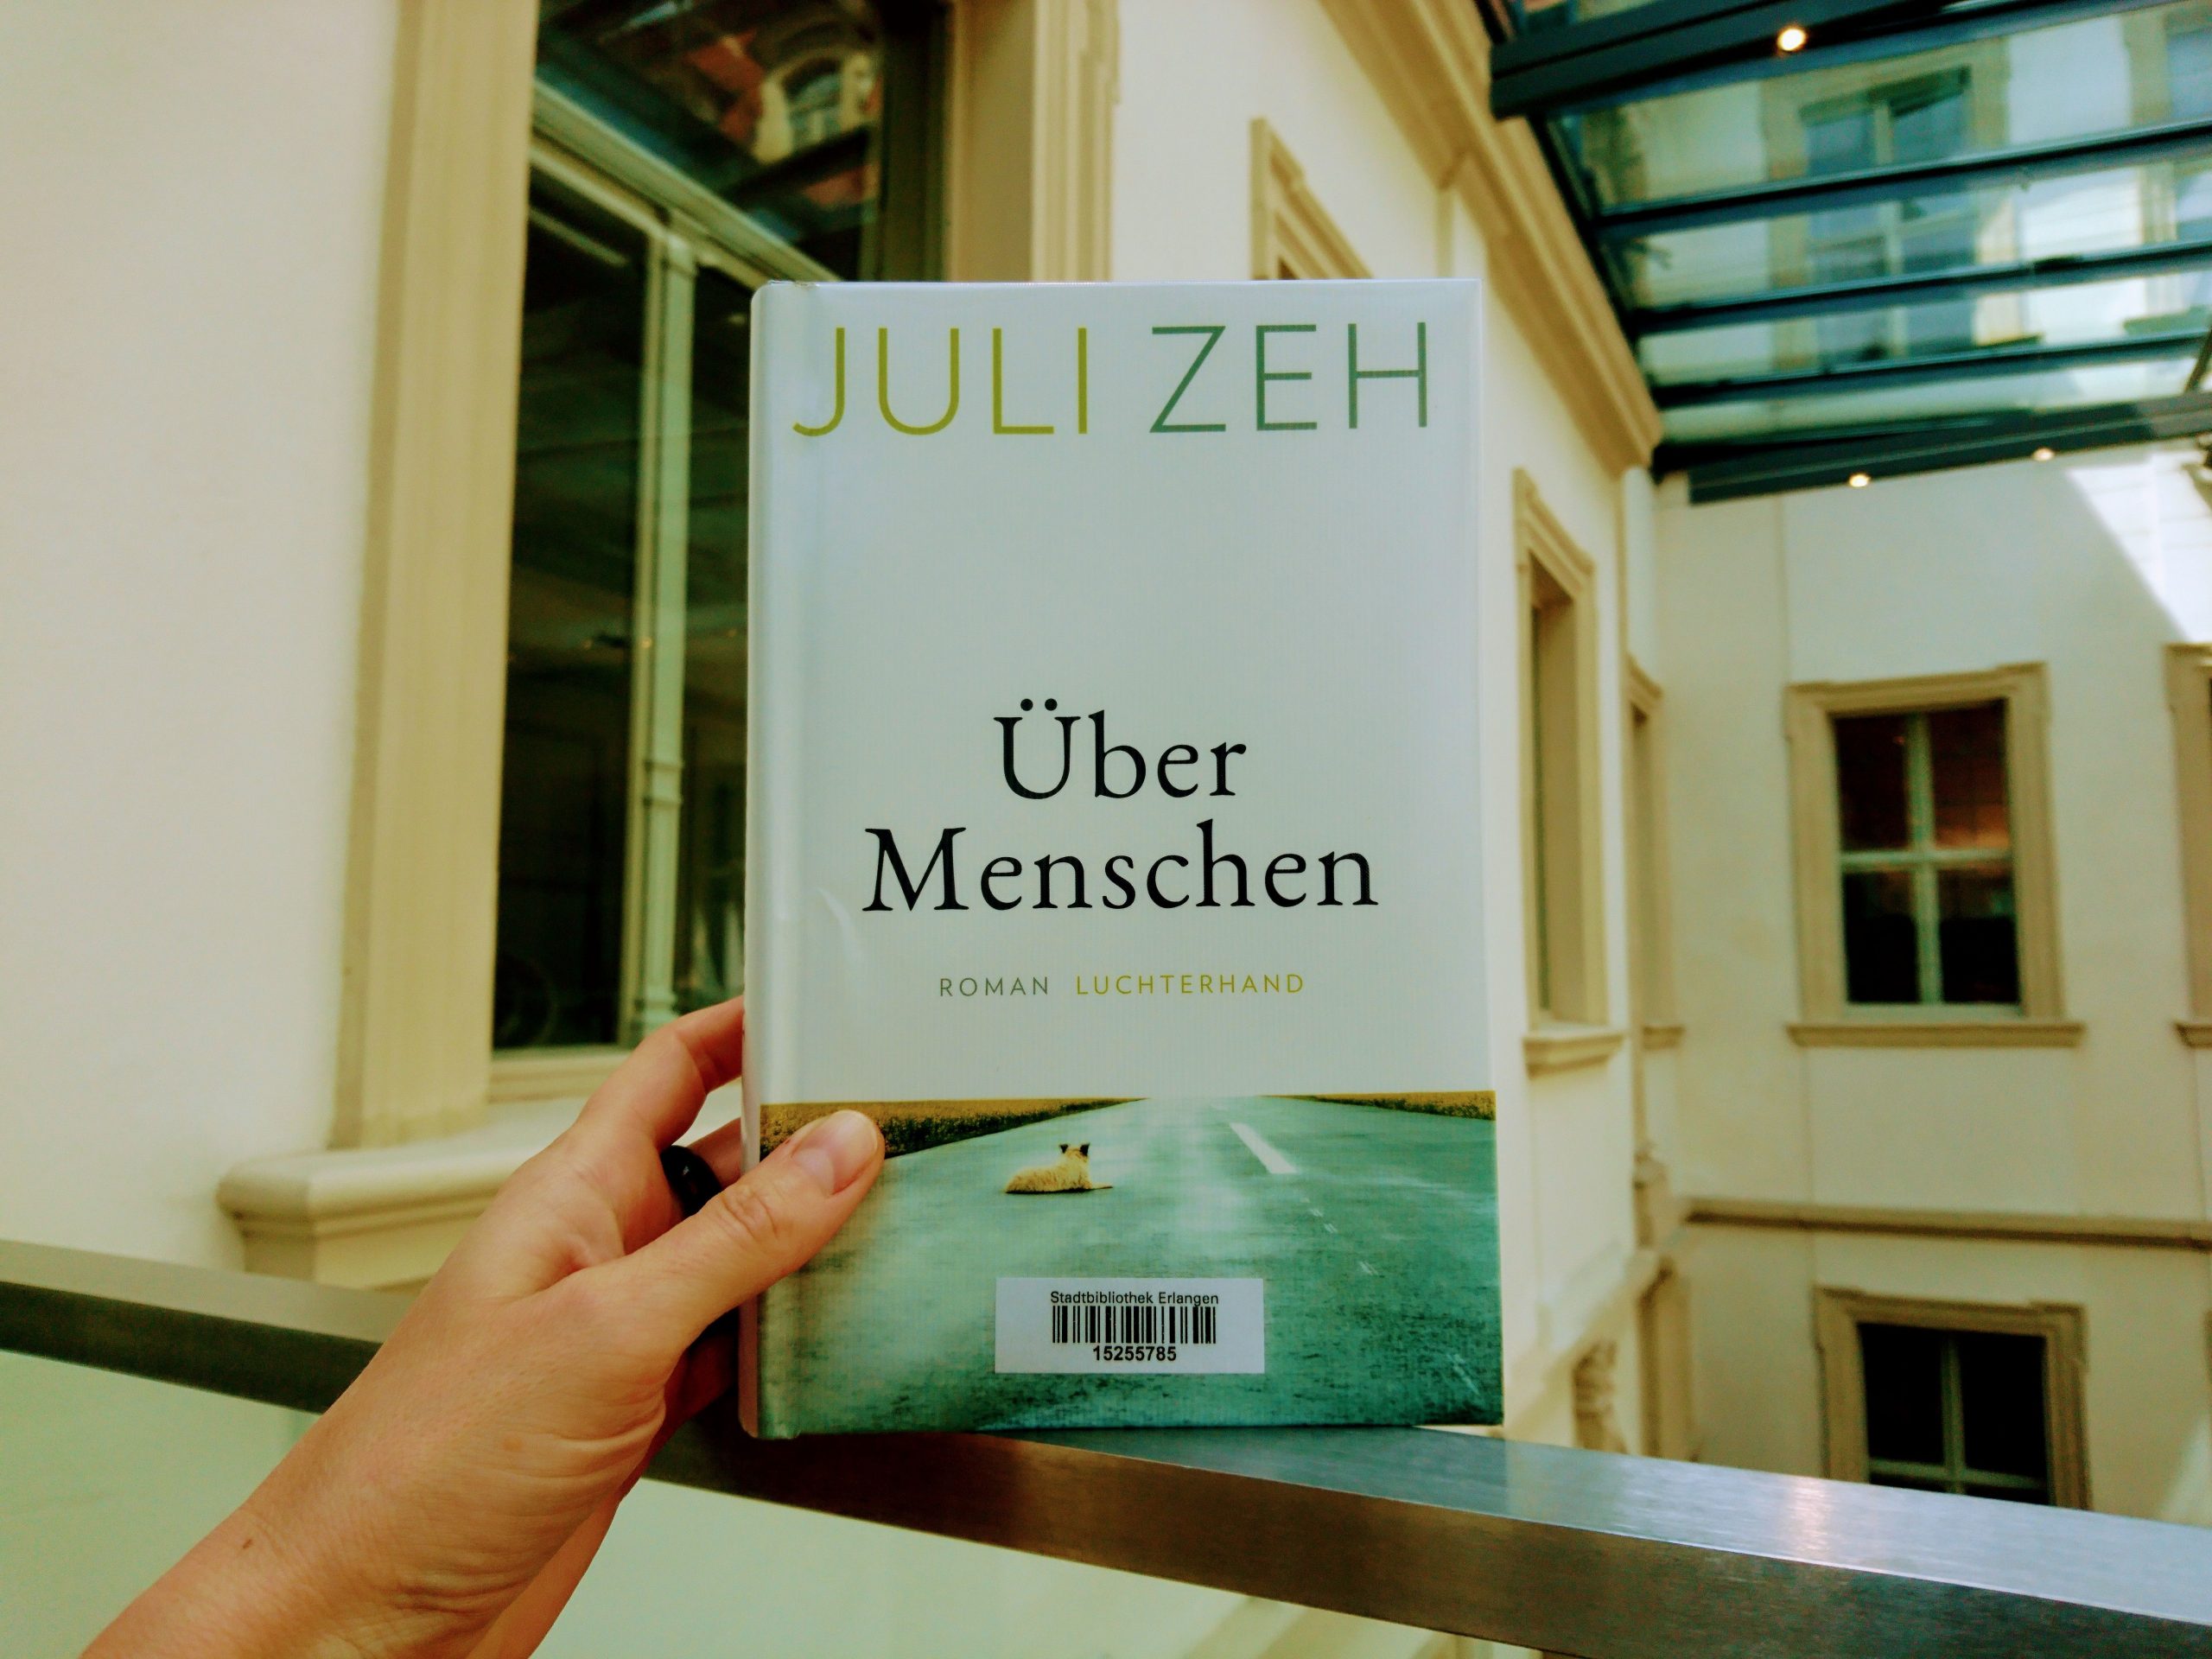 Juli Zeh "Über Menschen" (c) Stadtbibliothek Erlangen